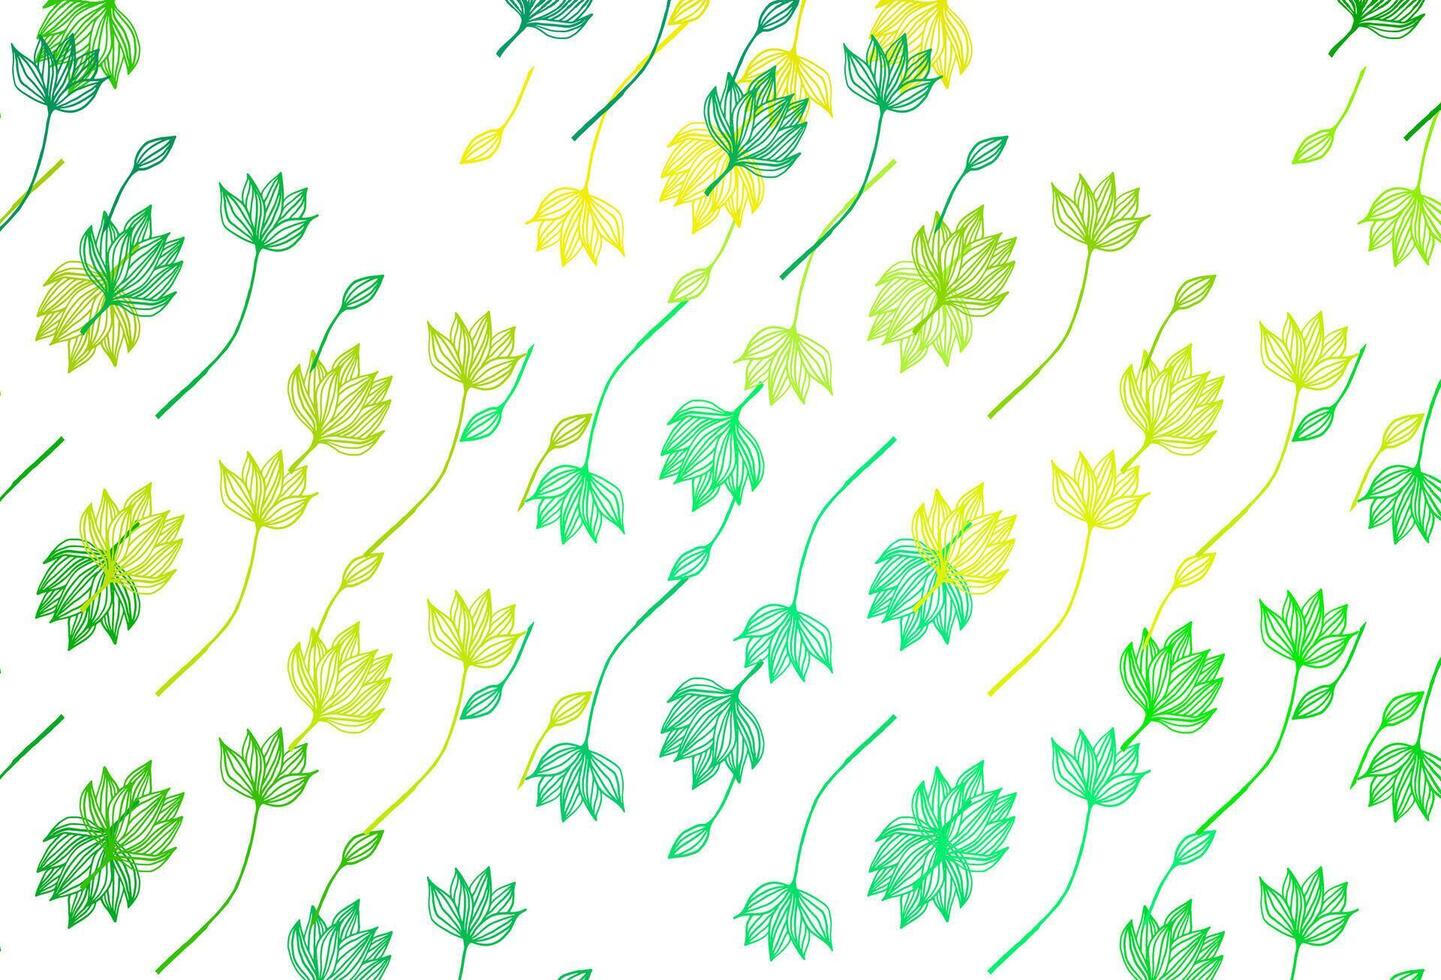 ljusgrön, gul vektor doodle mönster.